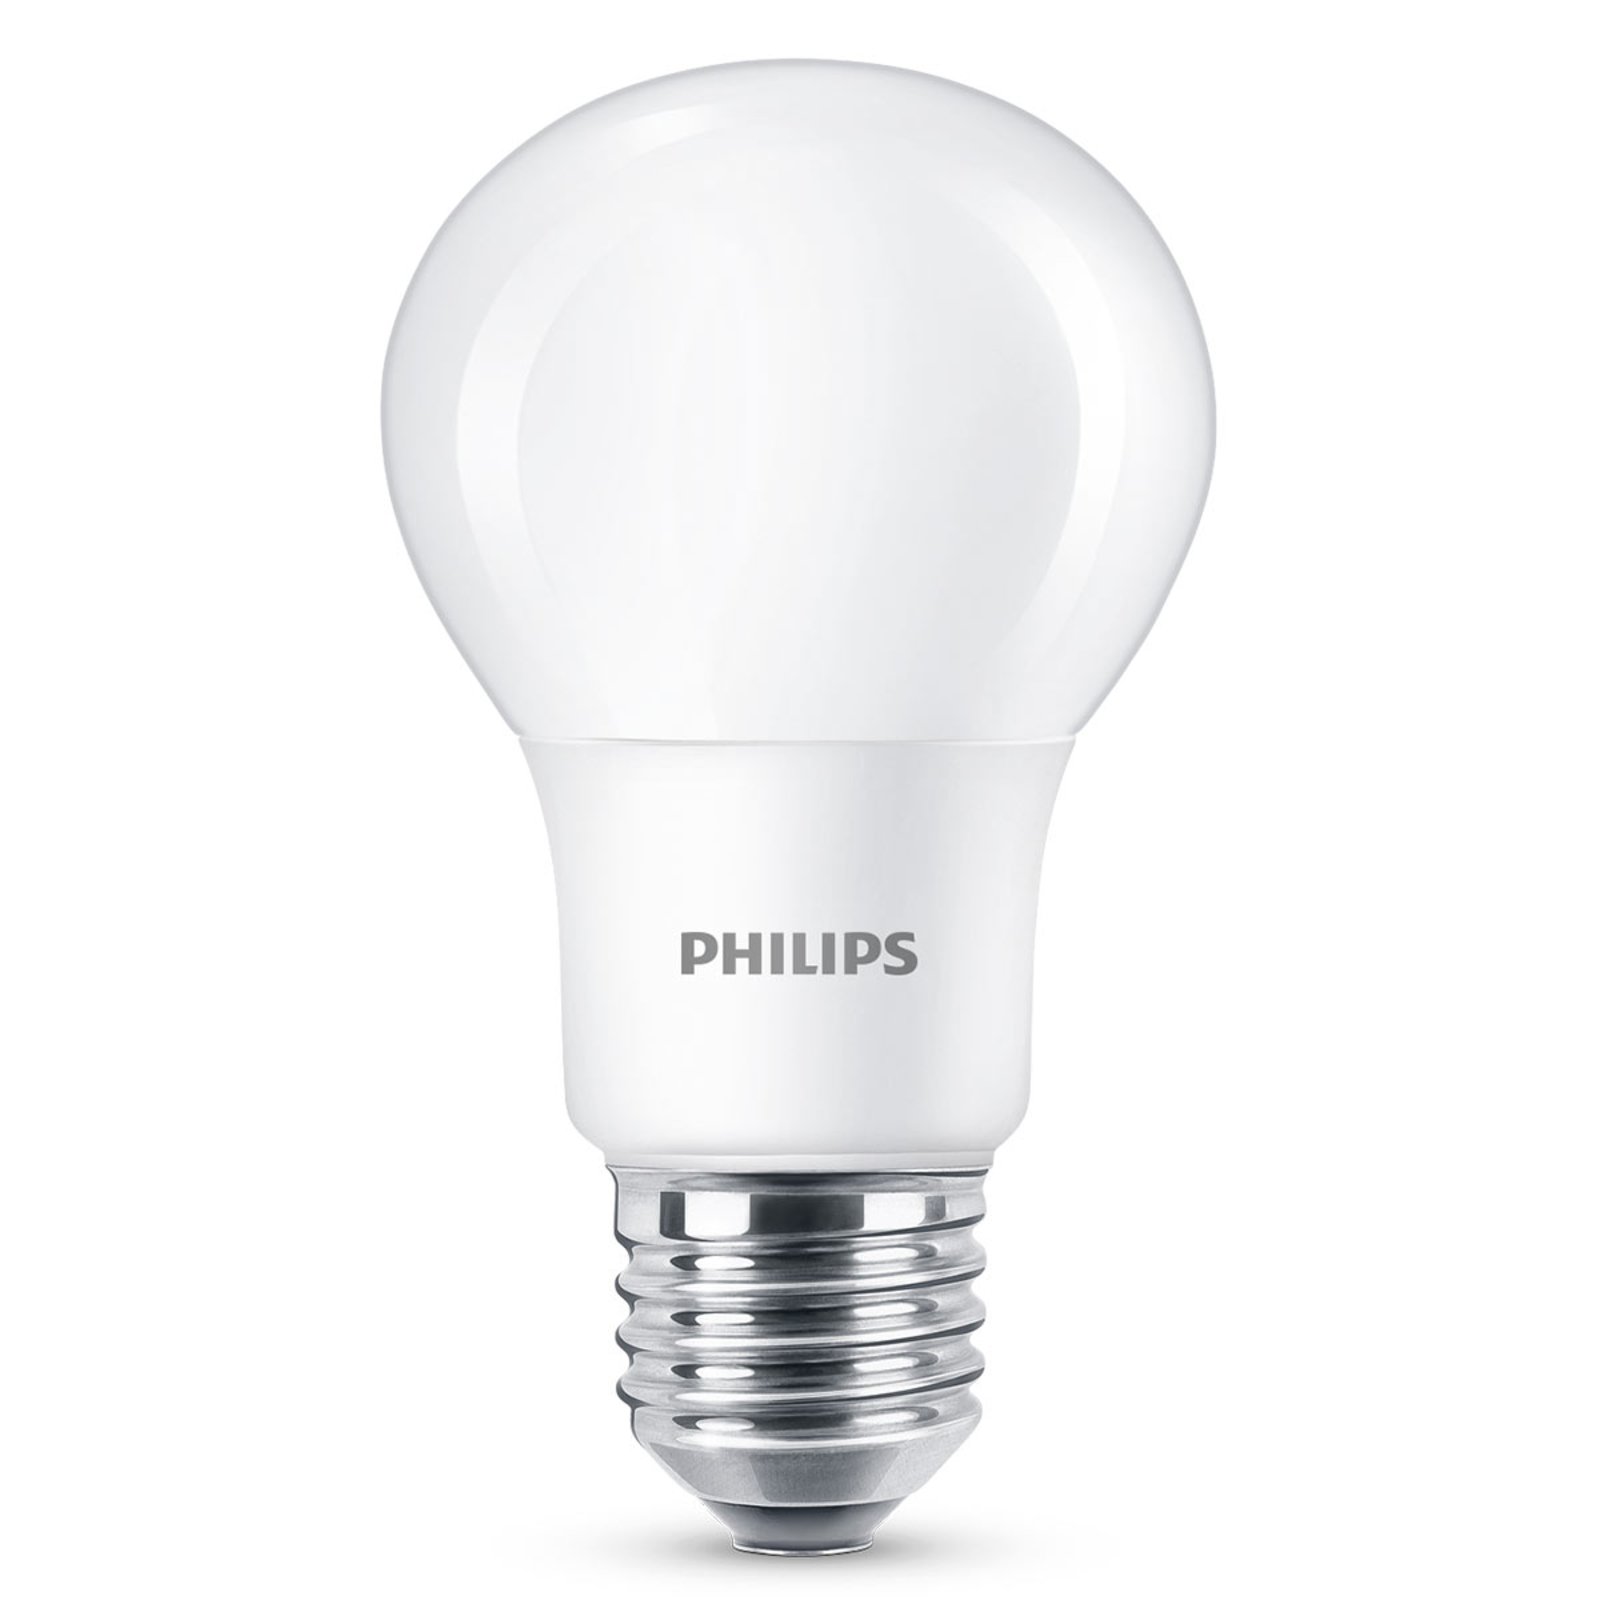 Philips E27 LED 2,2W bianco caldo, no dimming